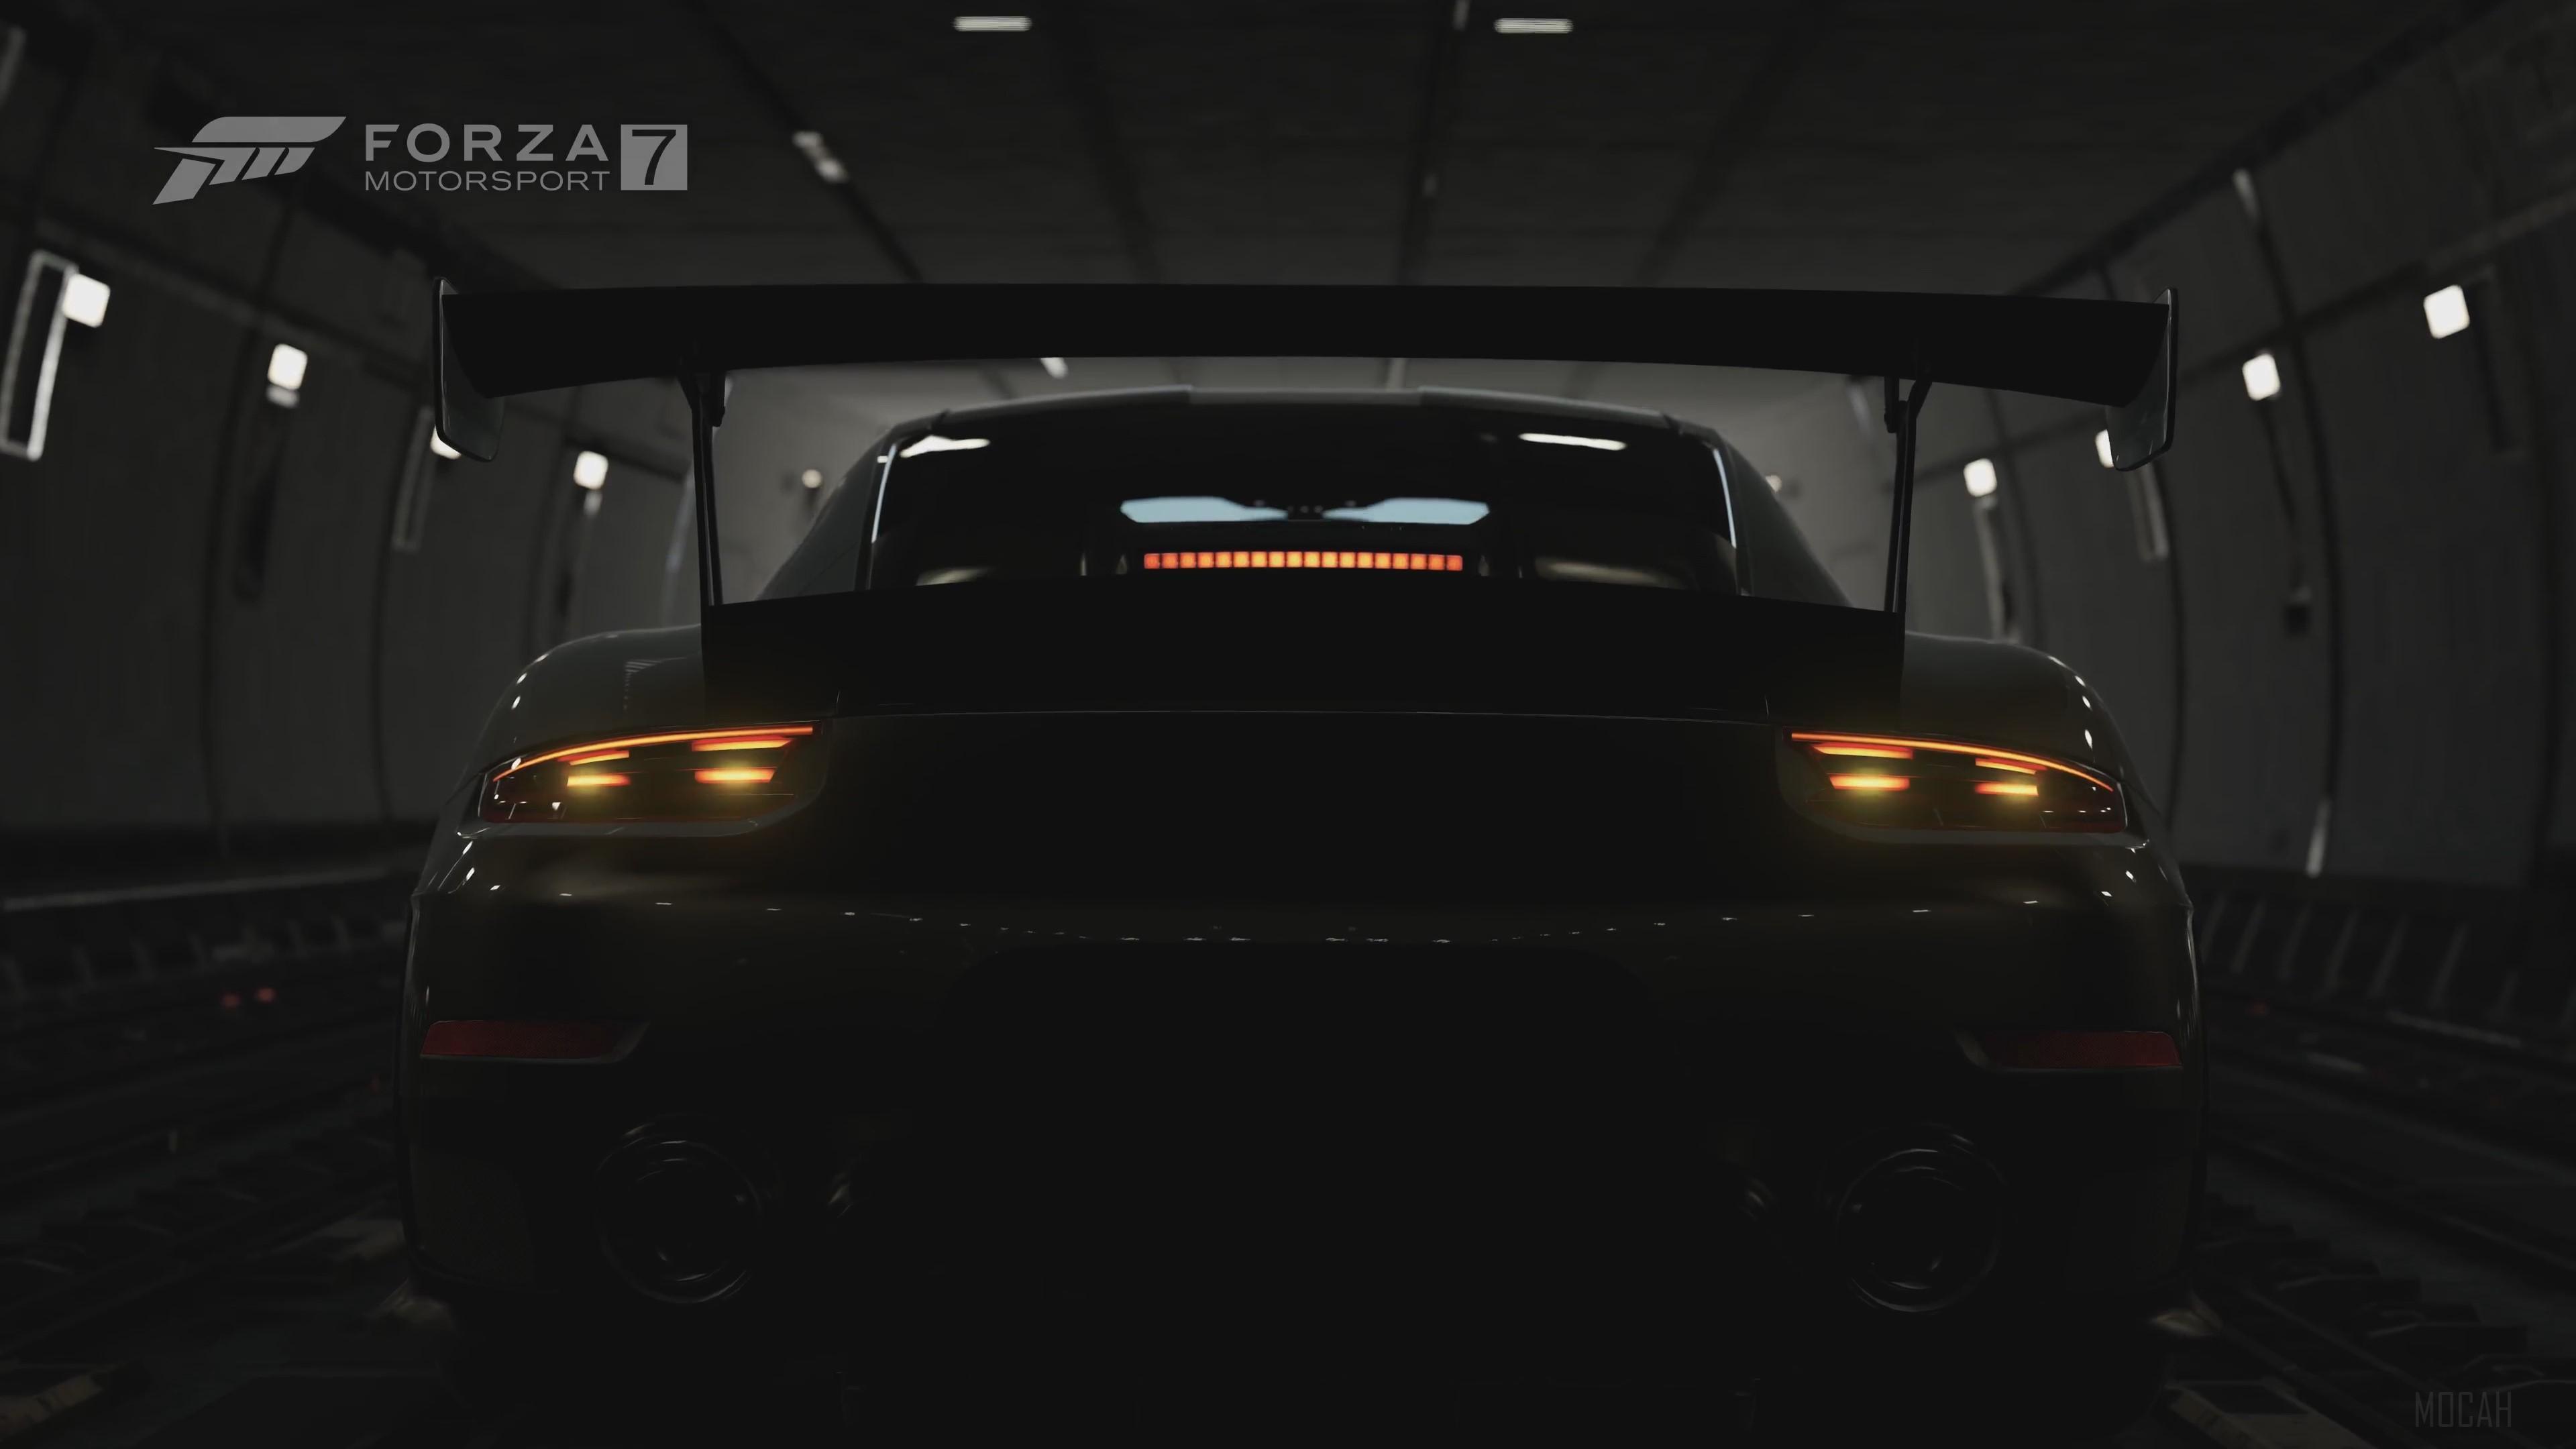 HD wallpaper, 2018 Porsche 911 Gt2 Rs Forza Motorsport 7 4K